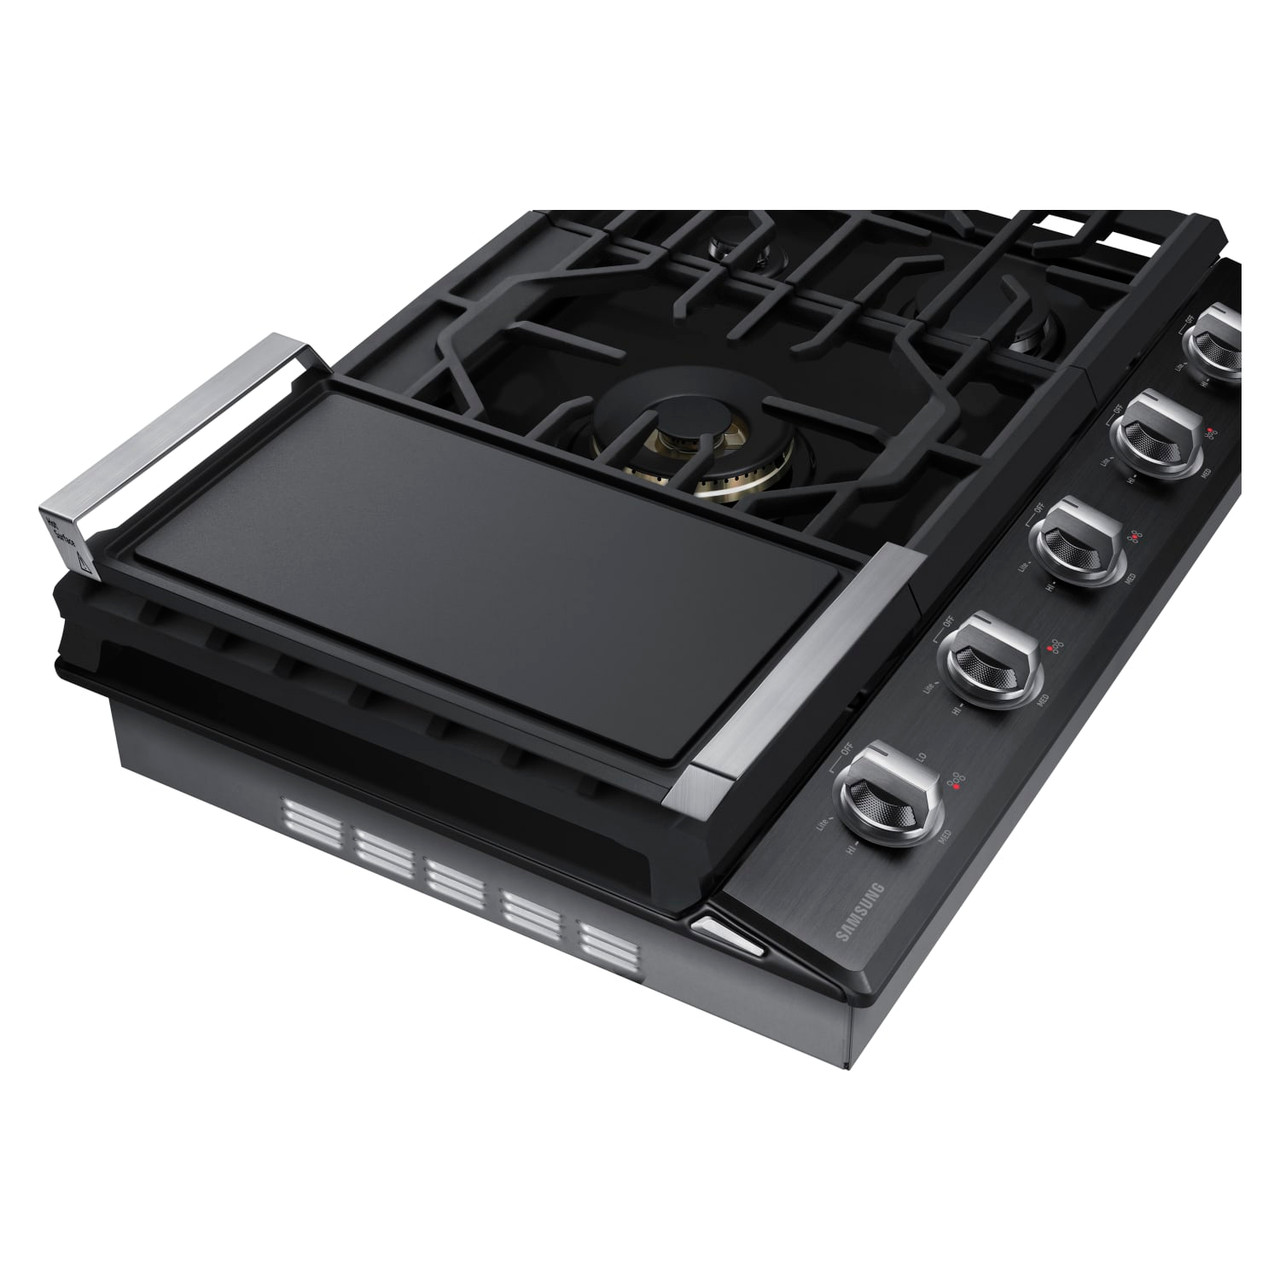 Samsung 36”, 5 Burner Cooktop in Fingerprint Resistant Black Stainless Steel